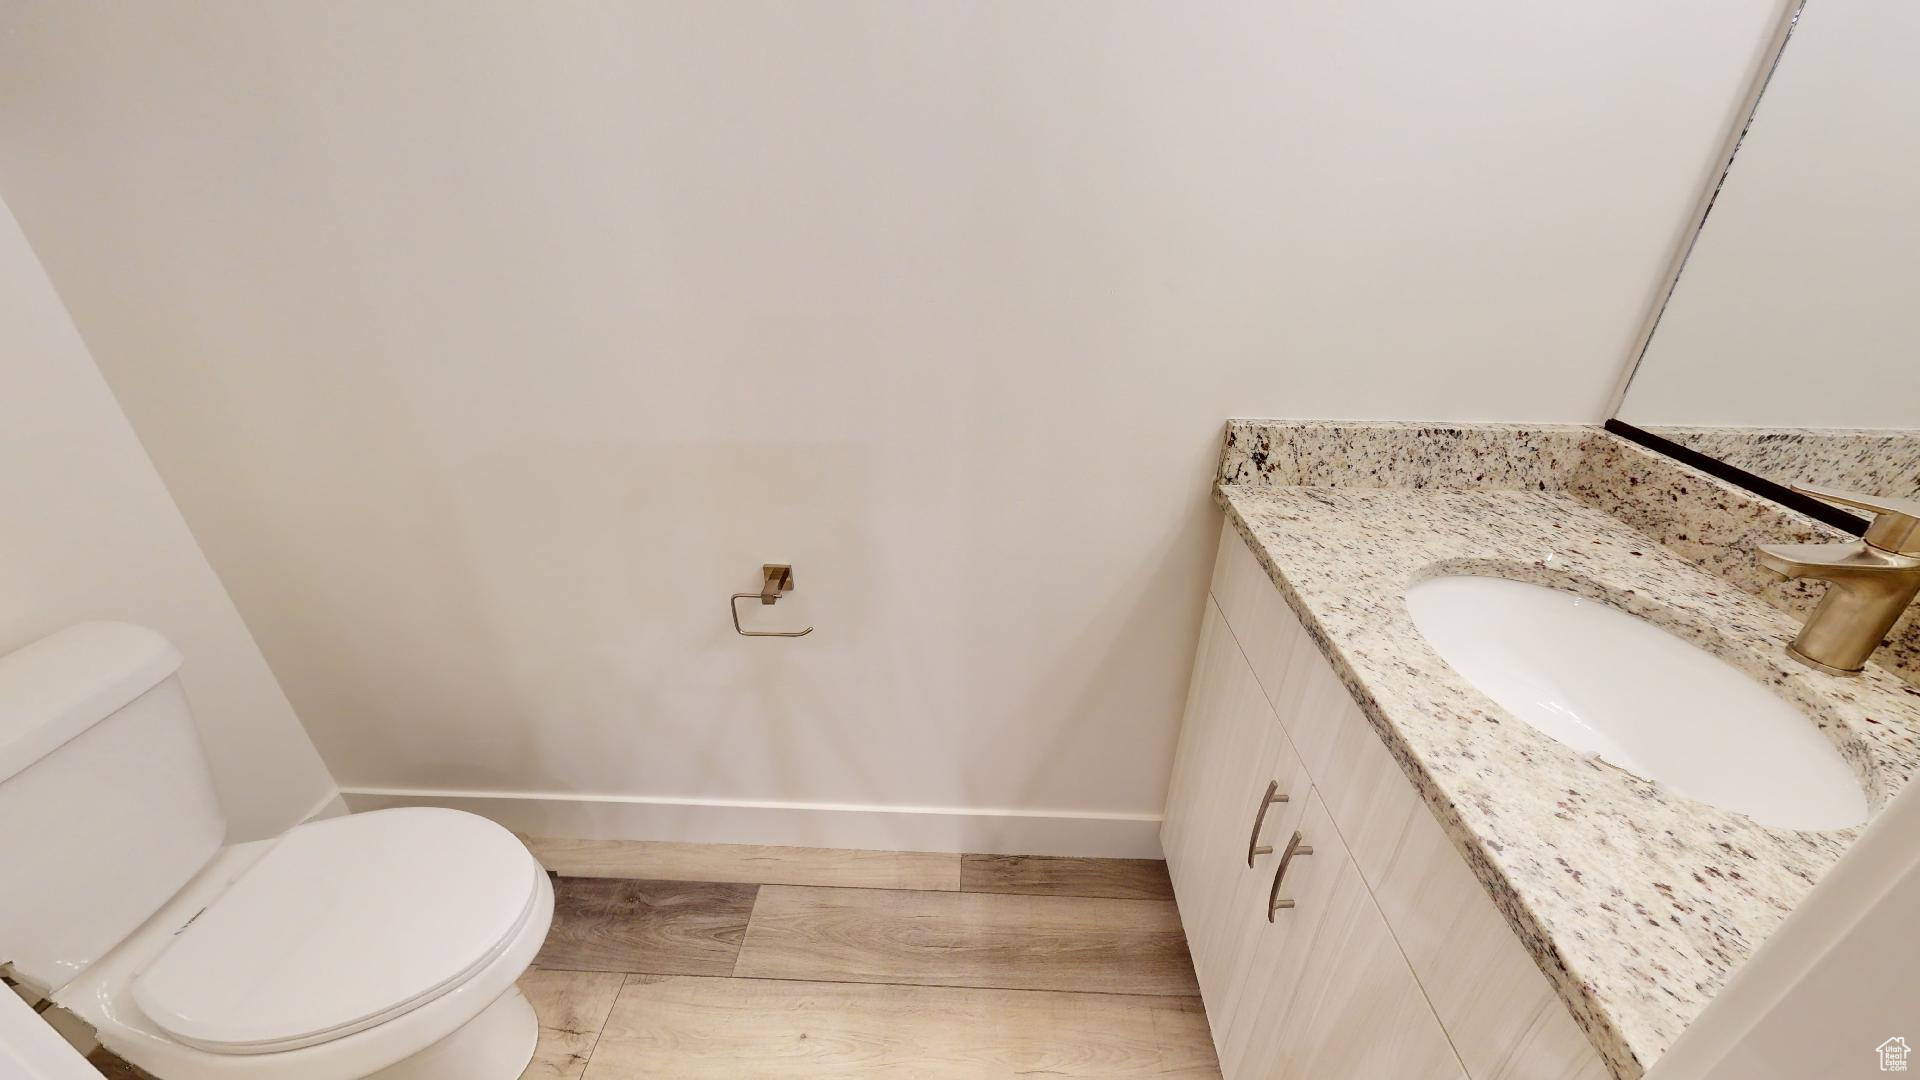 Bathroom featuring oversized vanity, tile floors, and toilet